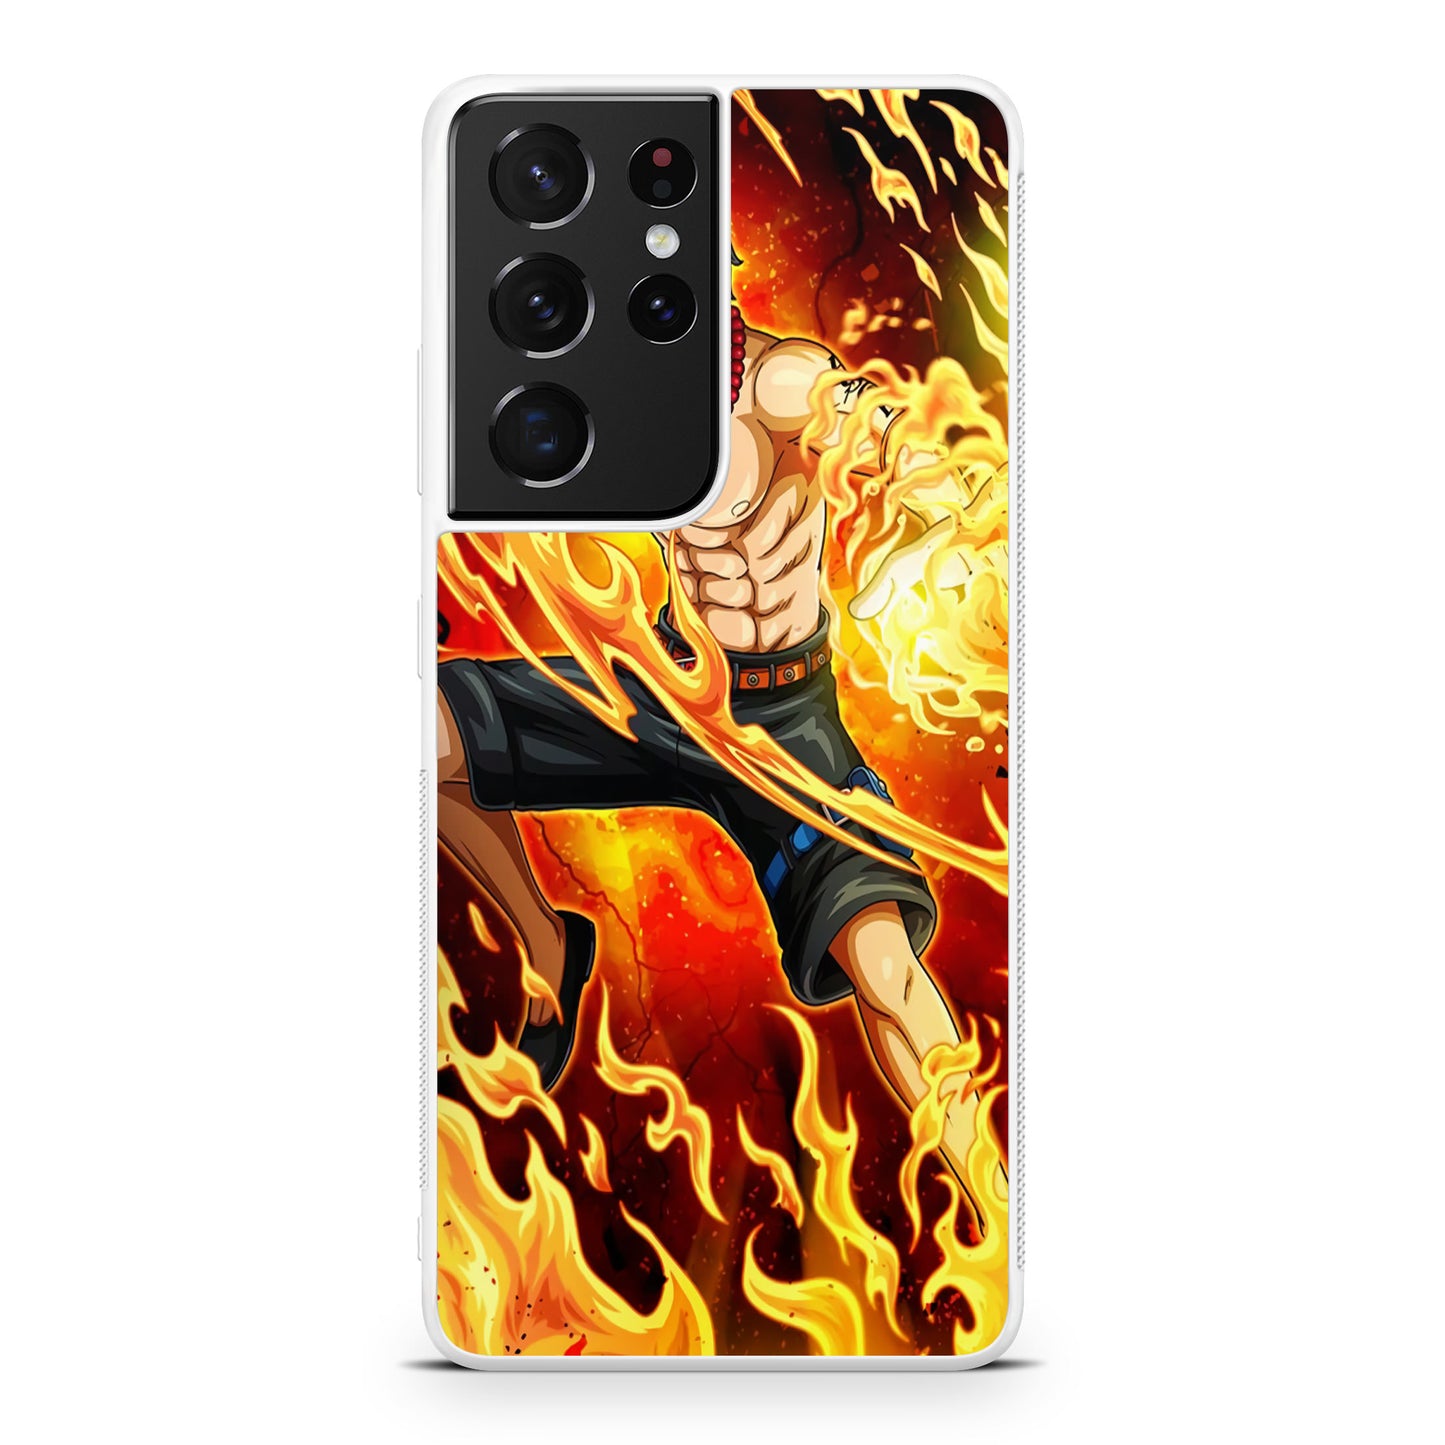 Ace Fire Fist Galaxy S21 Ultra Case